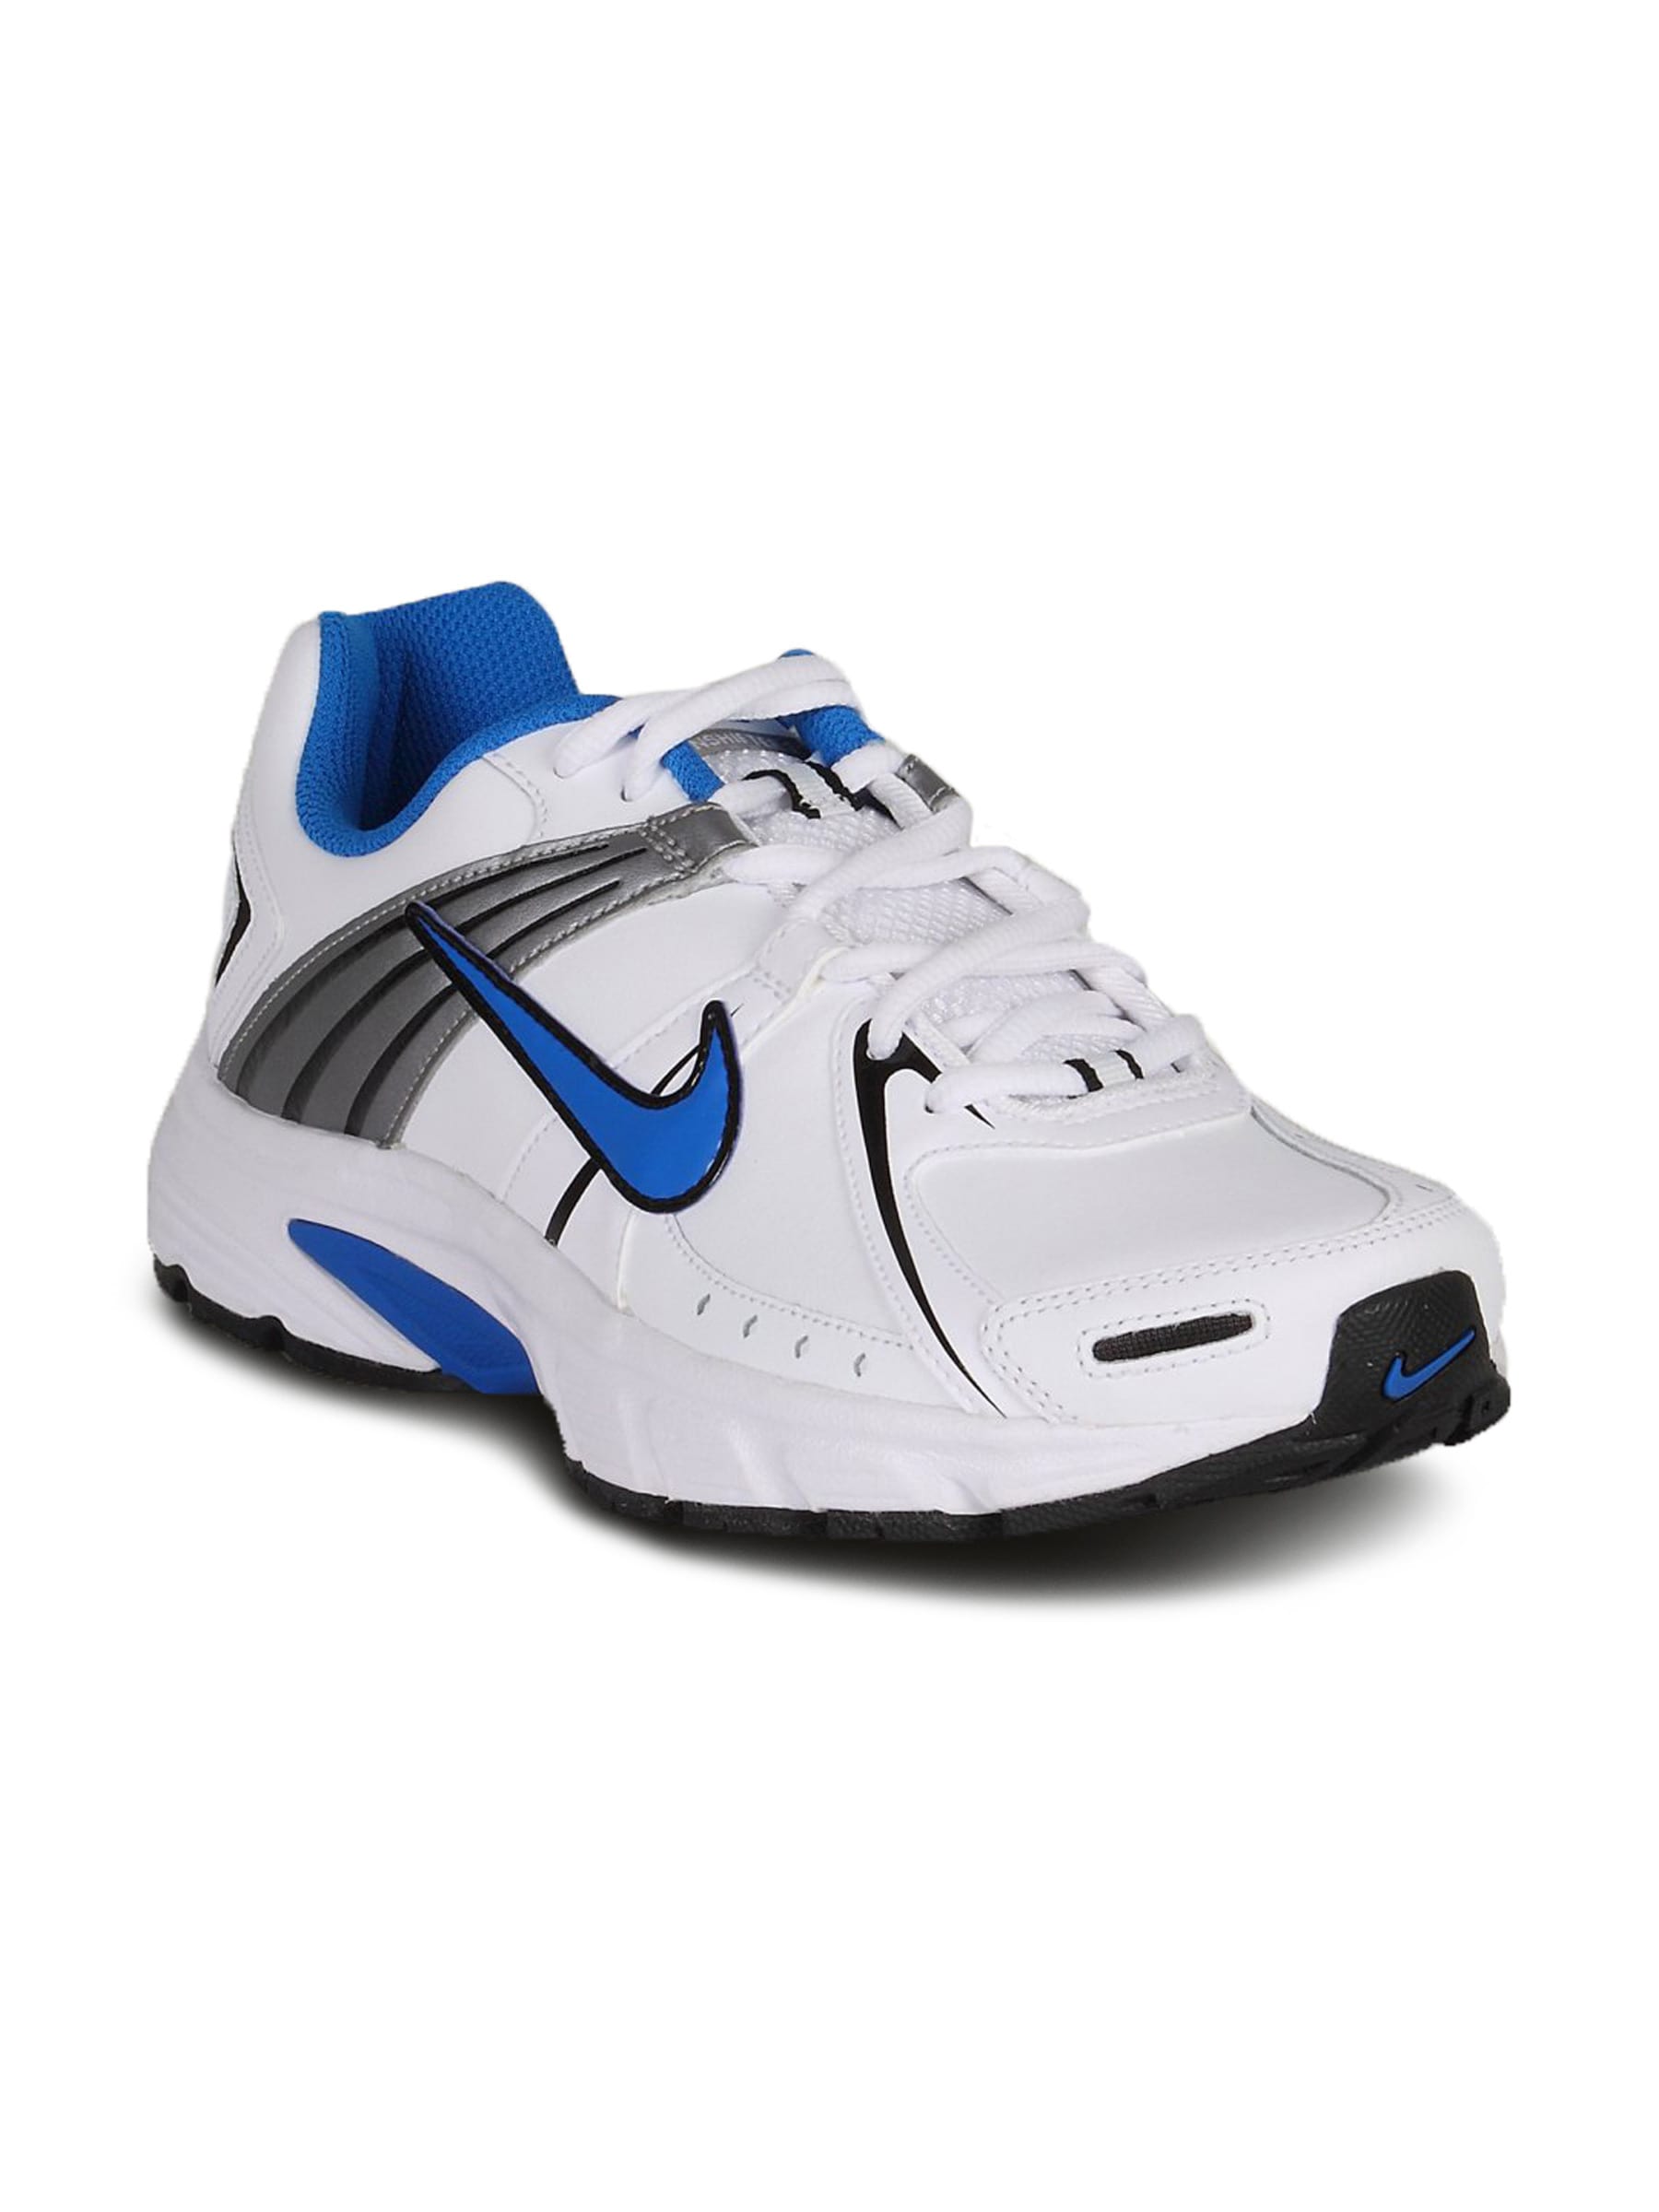 Nike Men's Downshif White Shoe